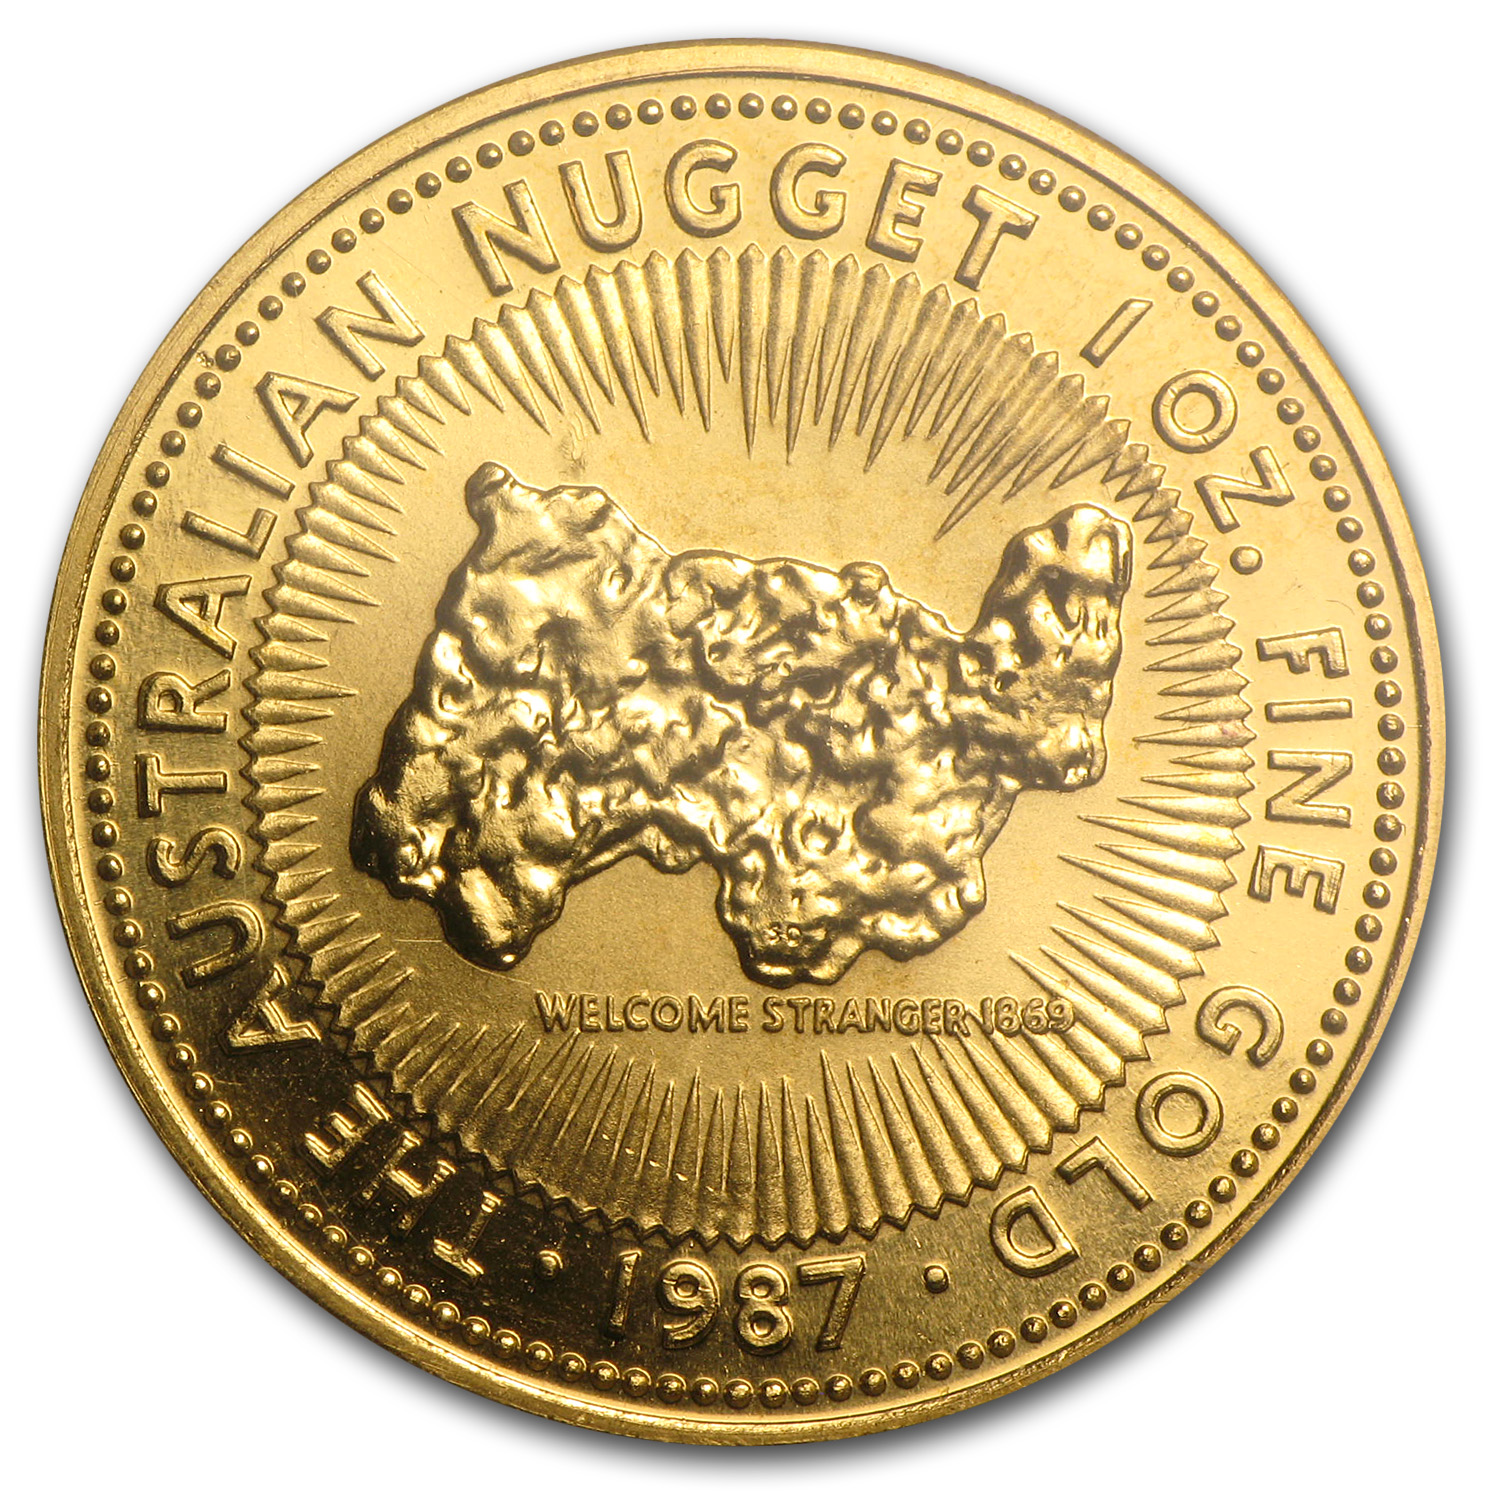 1987 1oz. Australian Gold Nugget bullion coin - reverse side